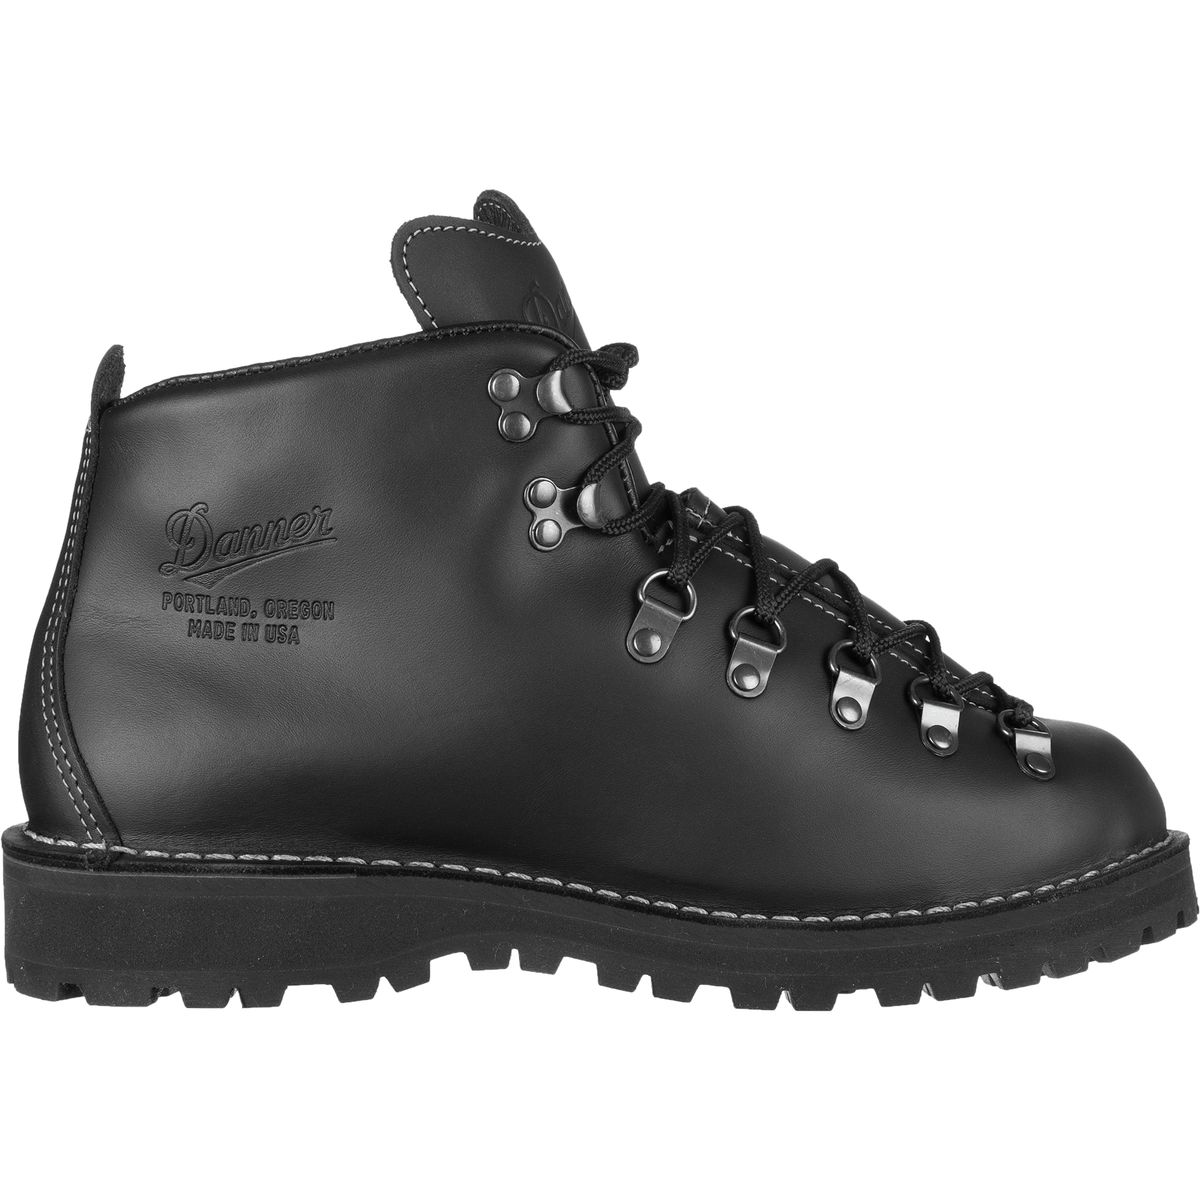 Mountain Light 2 Leather Hiking Boot - Men